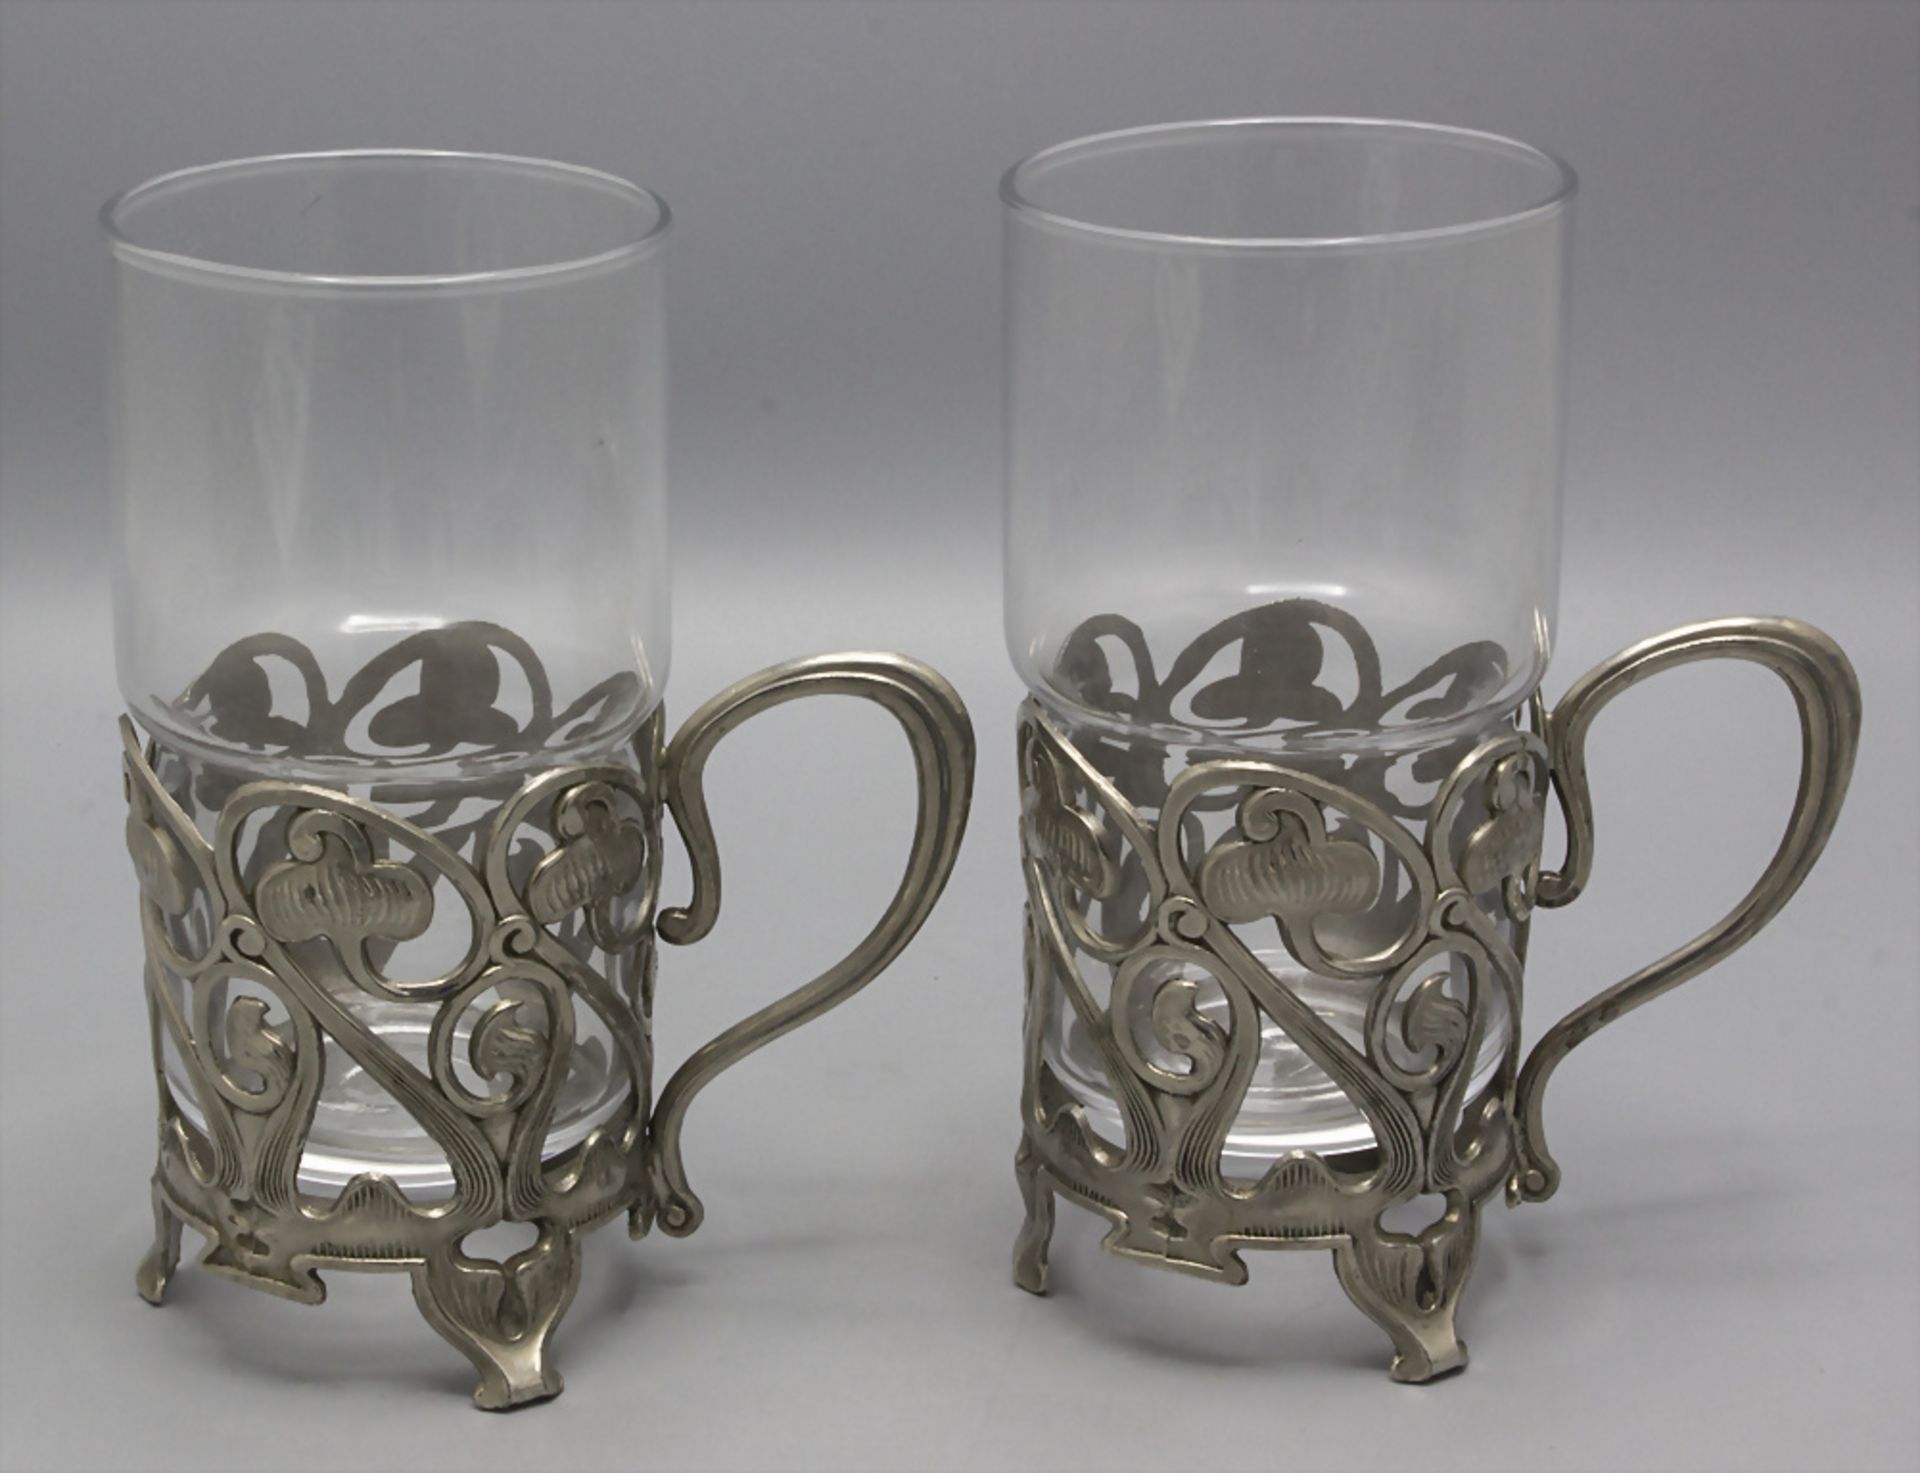 Paar Teeglashalter mit Jugendstildekor / A pair of tea glass holders with Art Nouveau floral ...